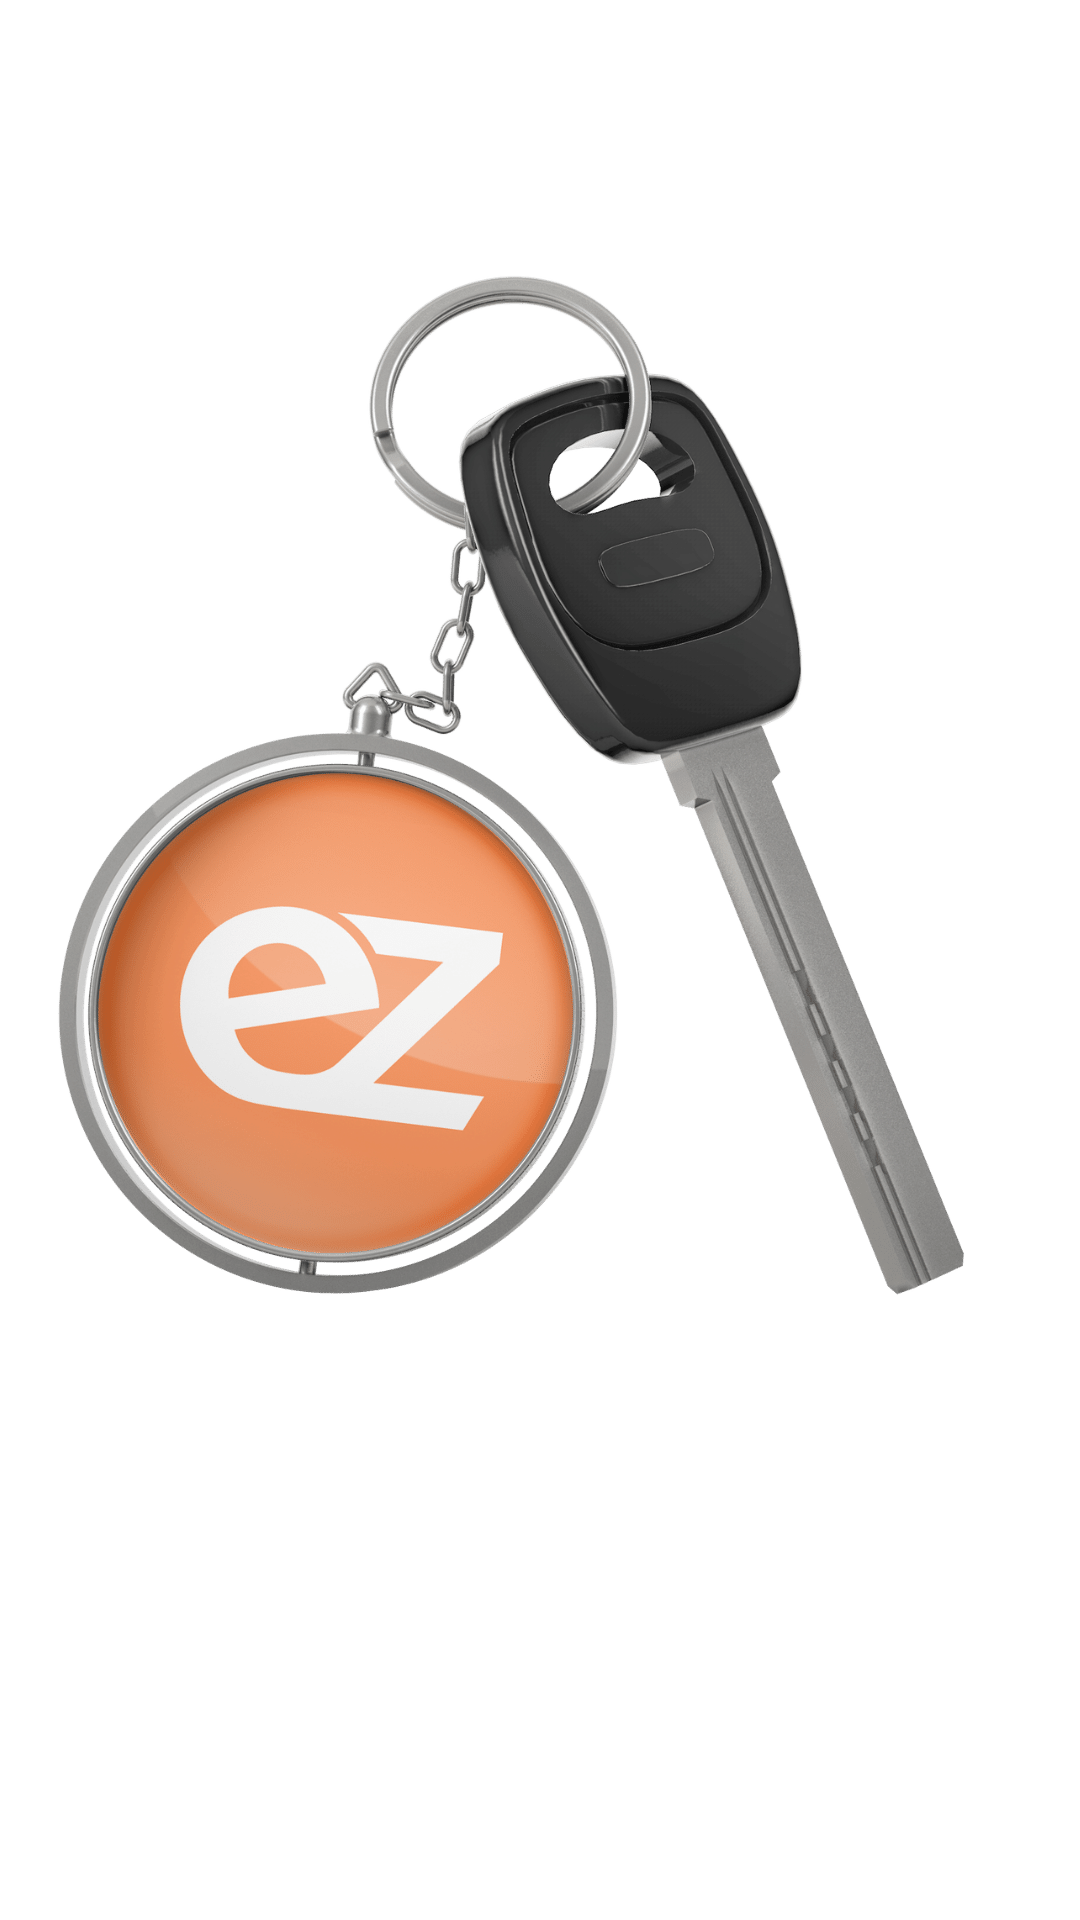 ezauto car key